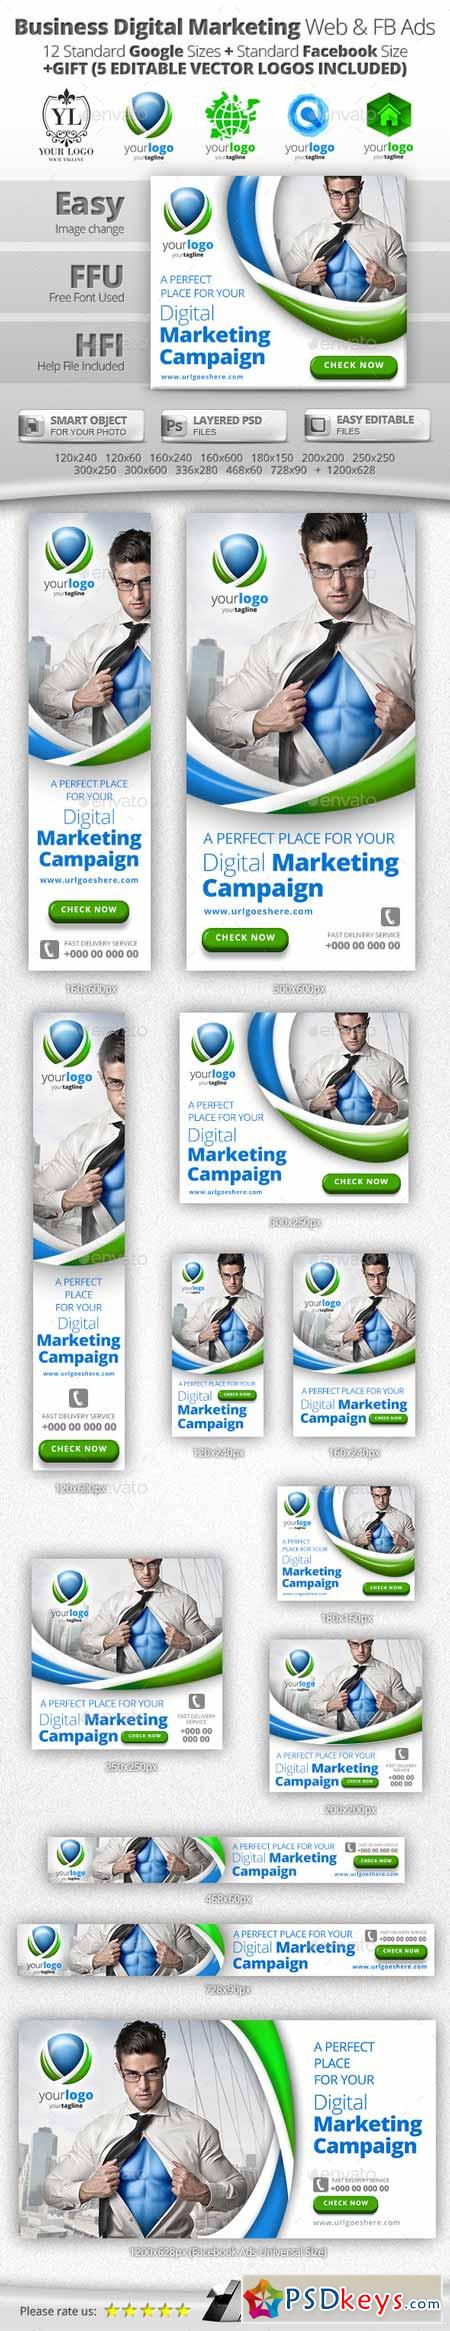 Business Digital Marketing Web & Facebook Banners 11403314